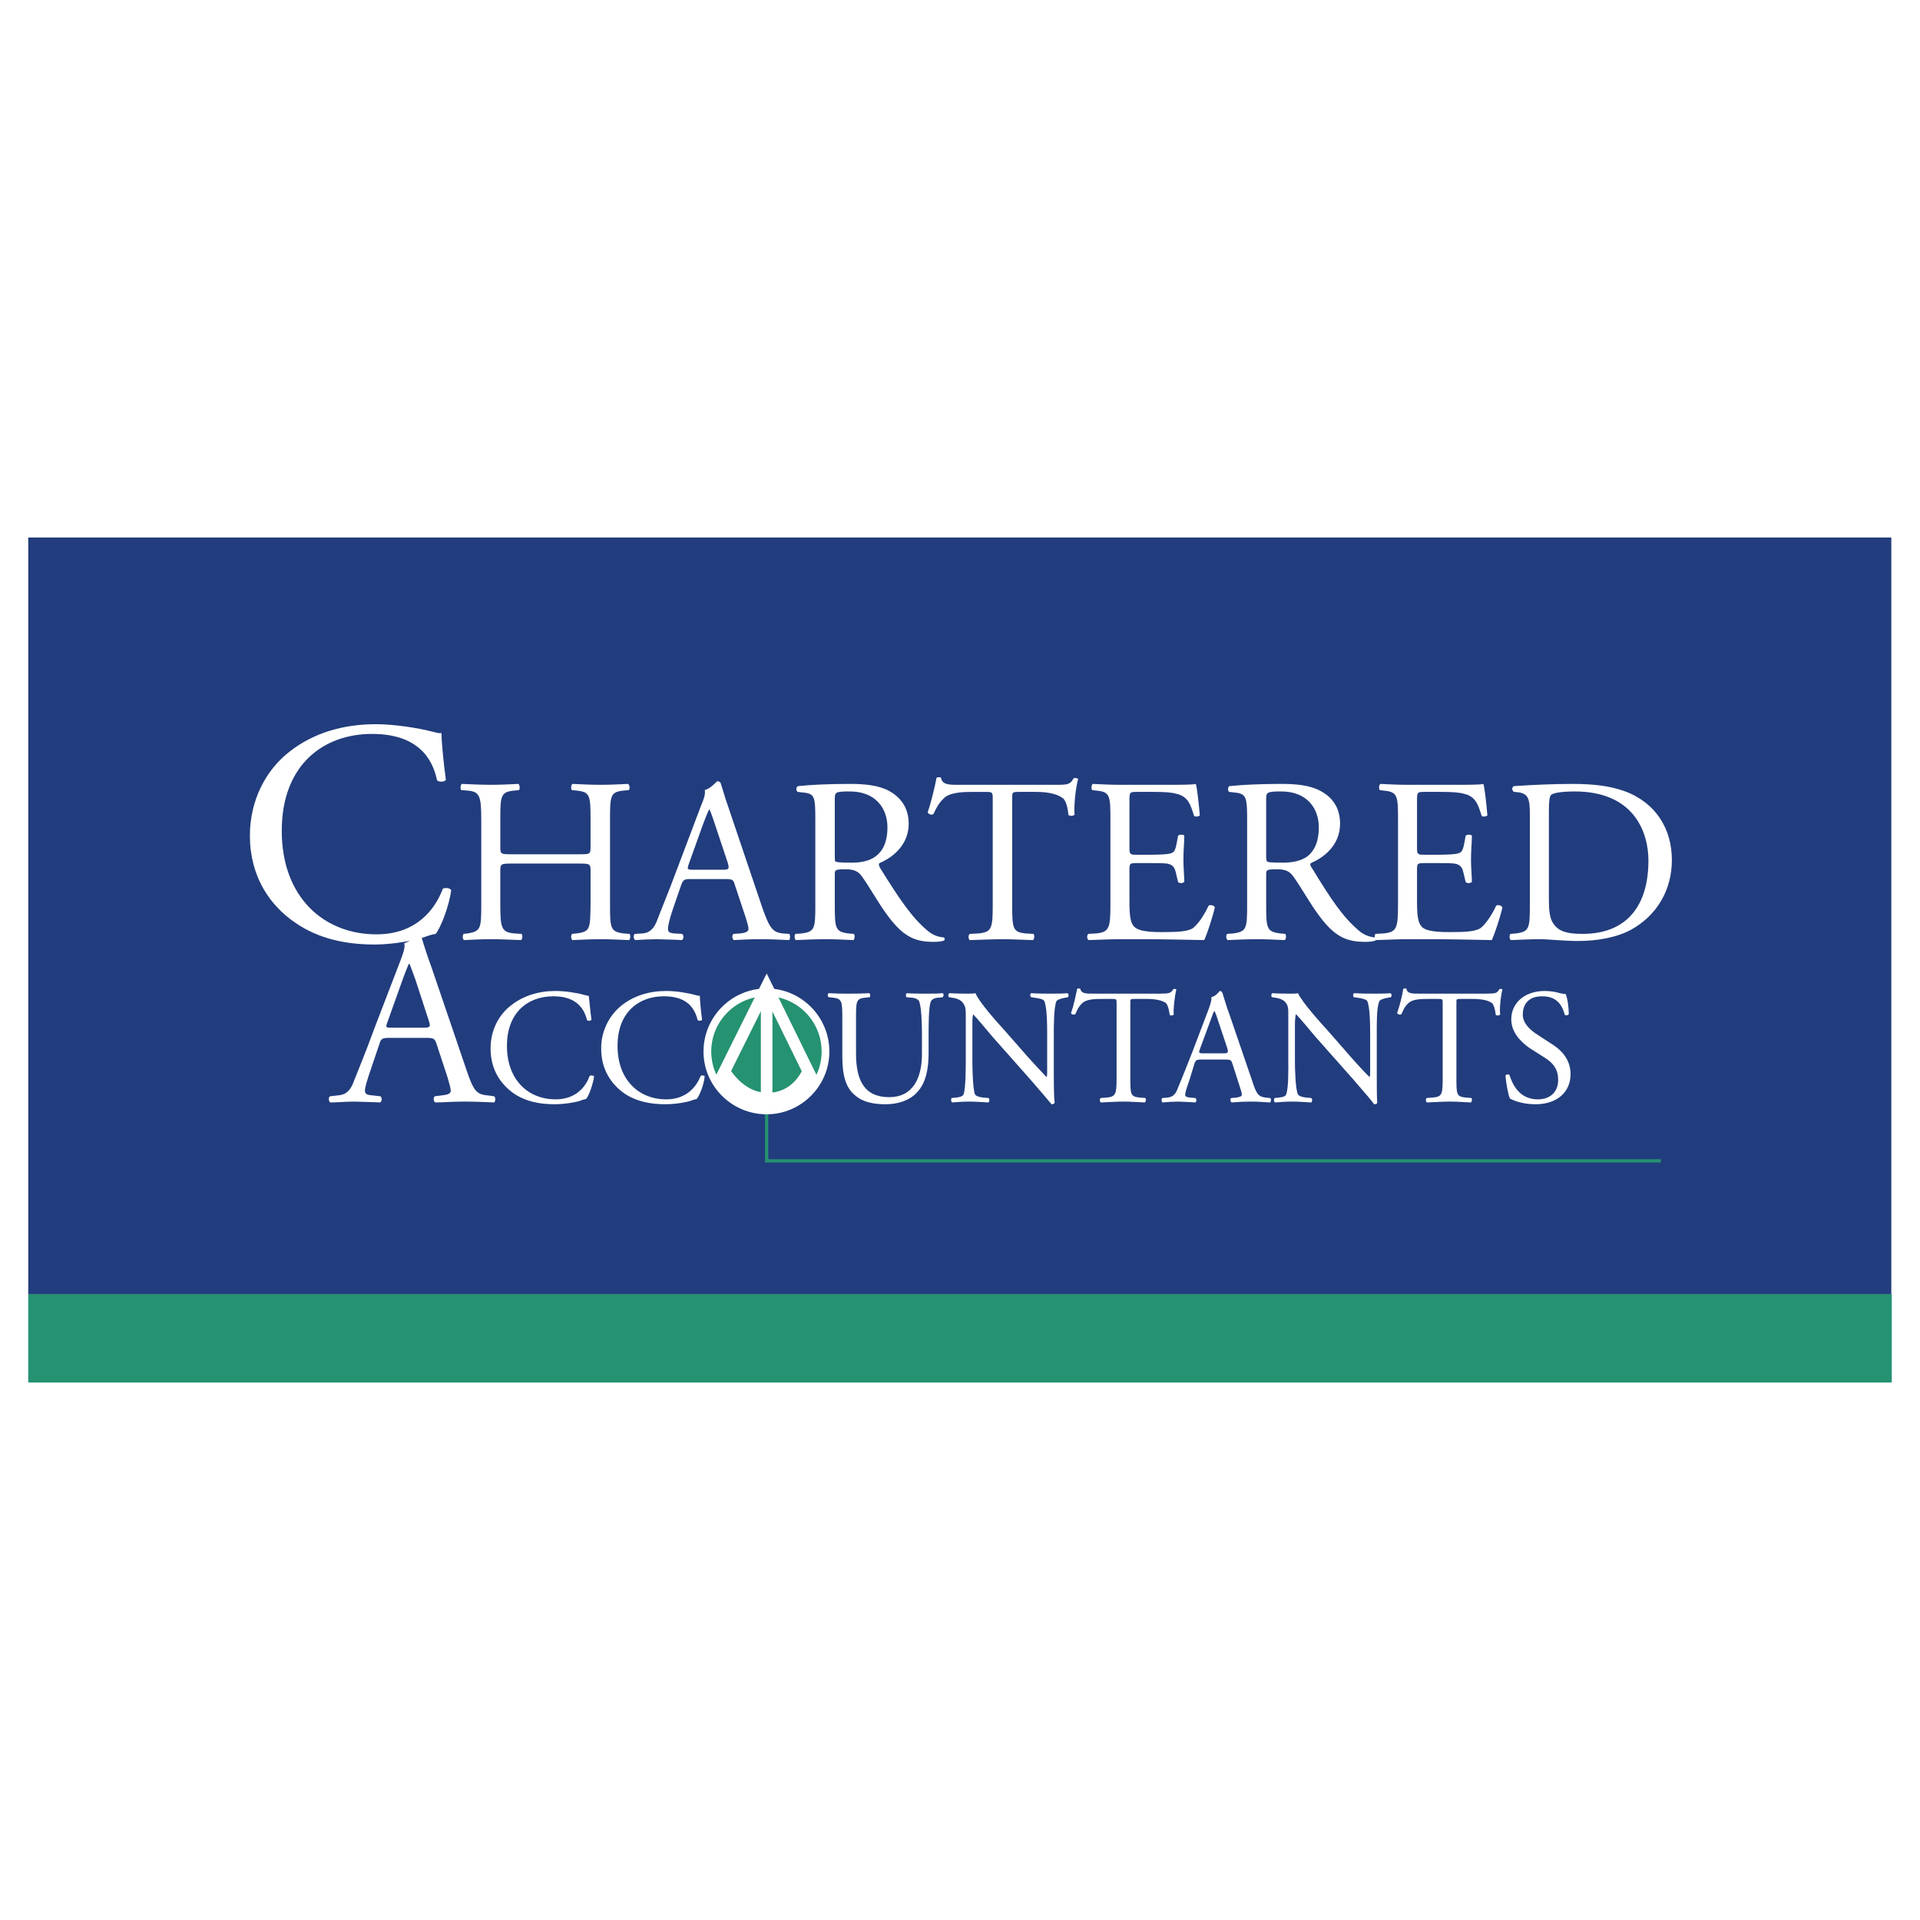 Chartered Accountant Banner Wallpaper